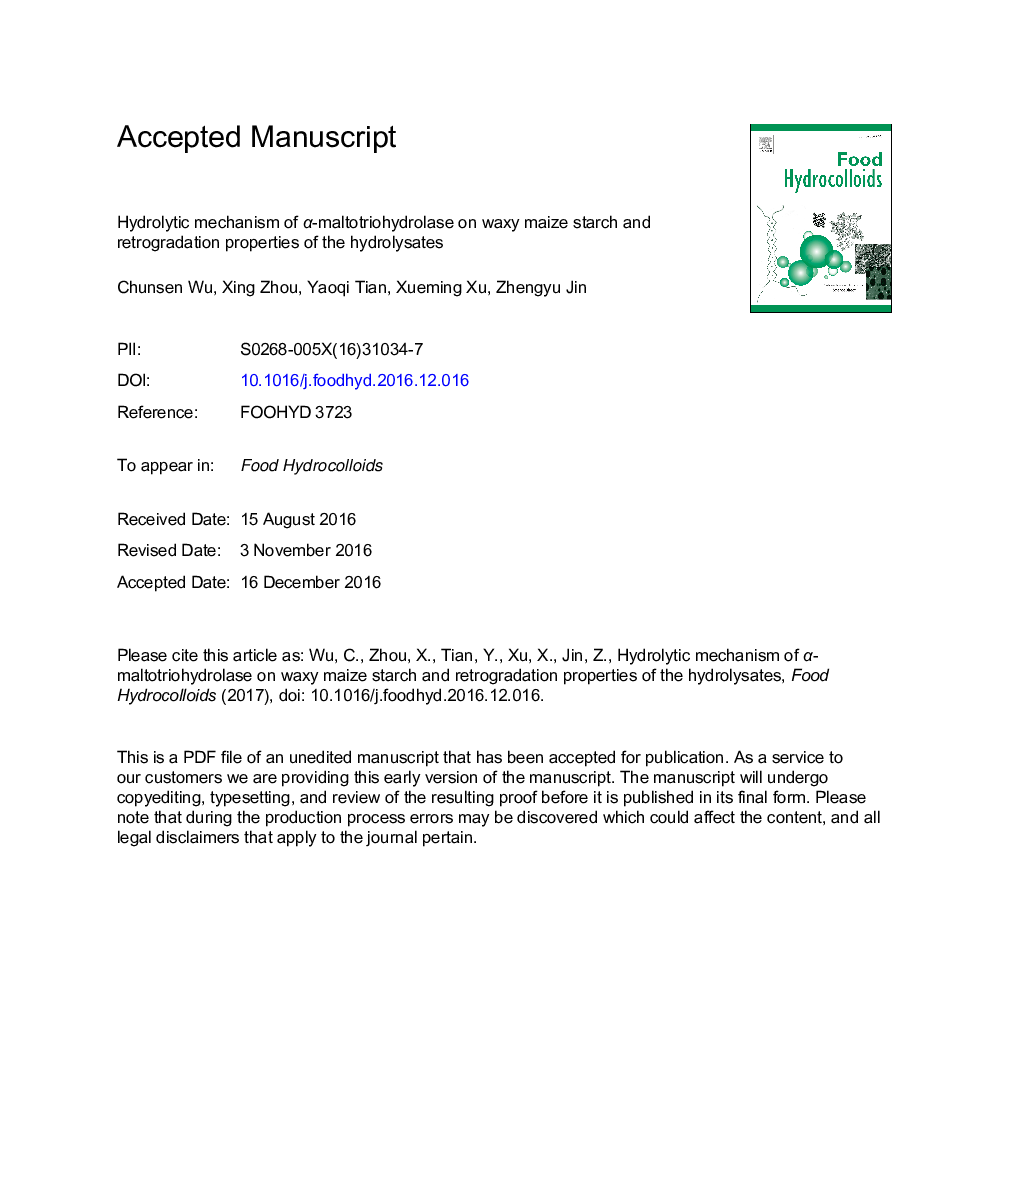 Hydrolytic mechanism of Î±-maltotriohydrolase on waxy maize starch and retrogradation properties of the hydrolysates